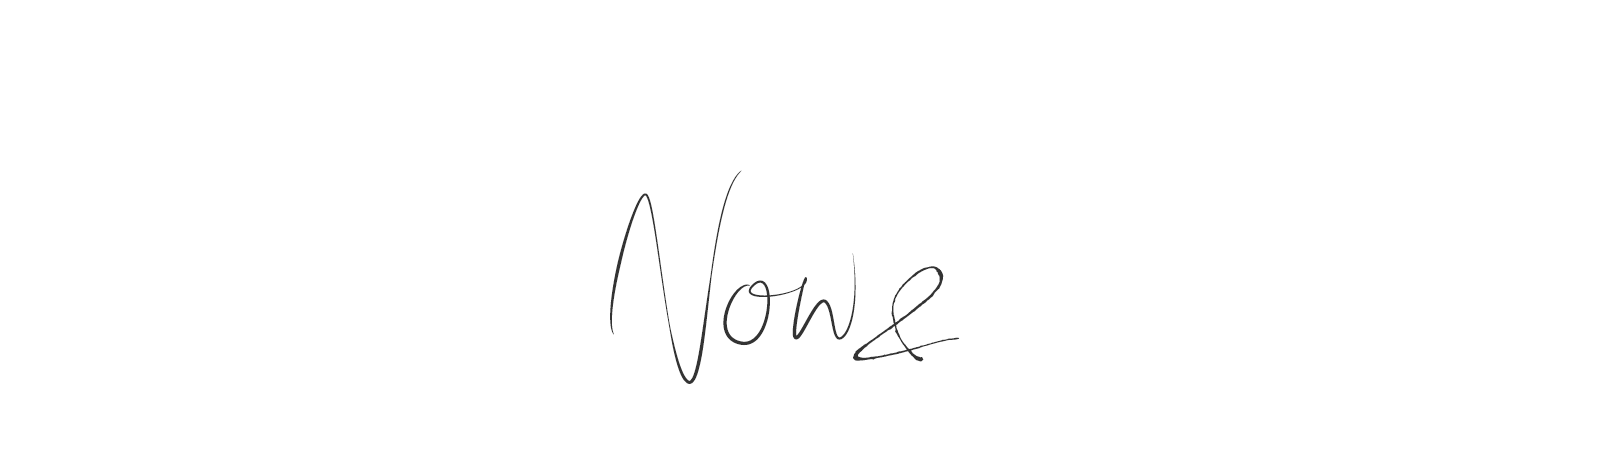 Now&